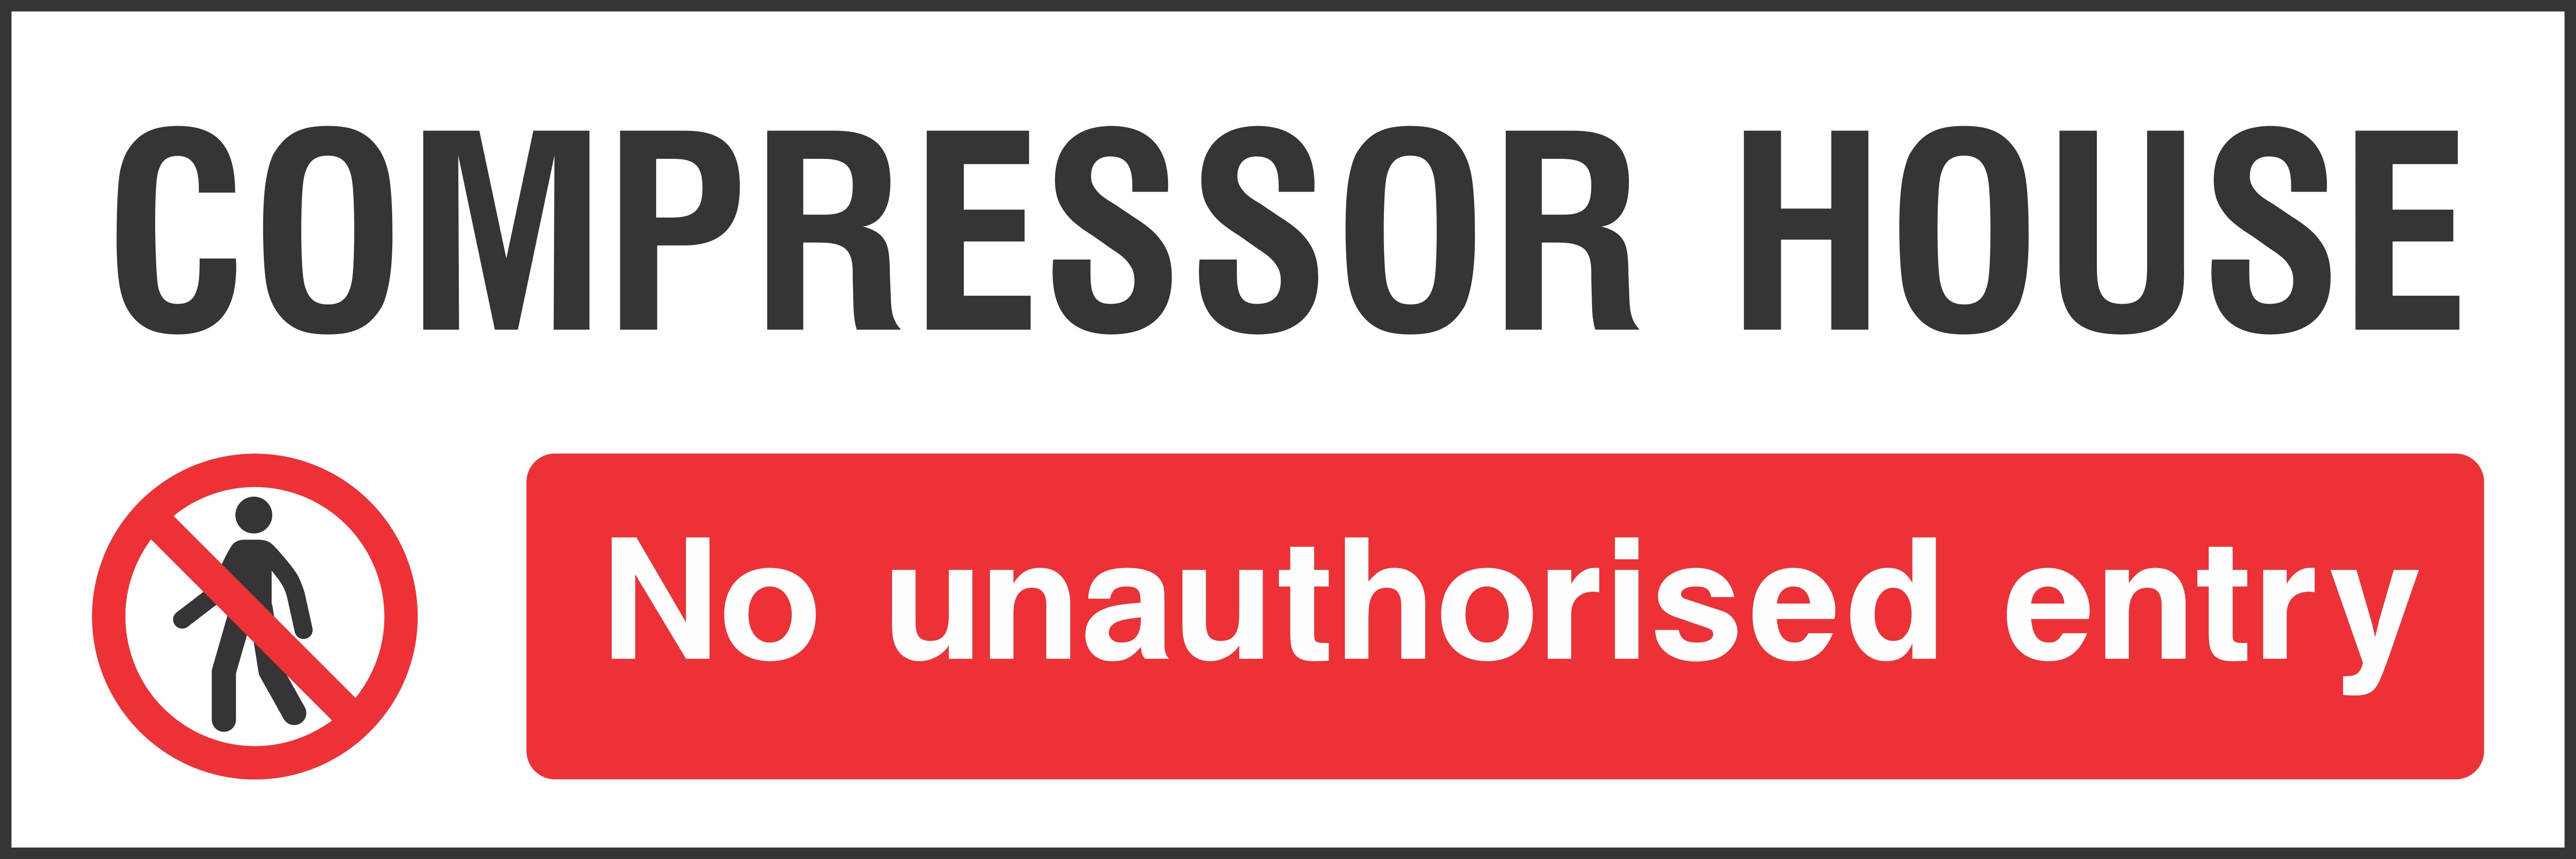 Compressor house Sign